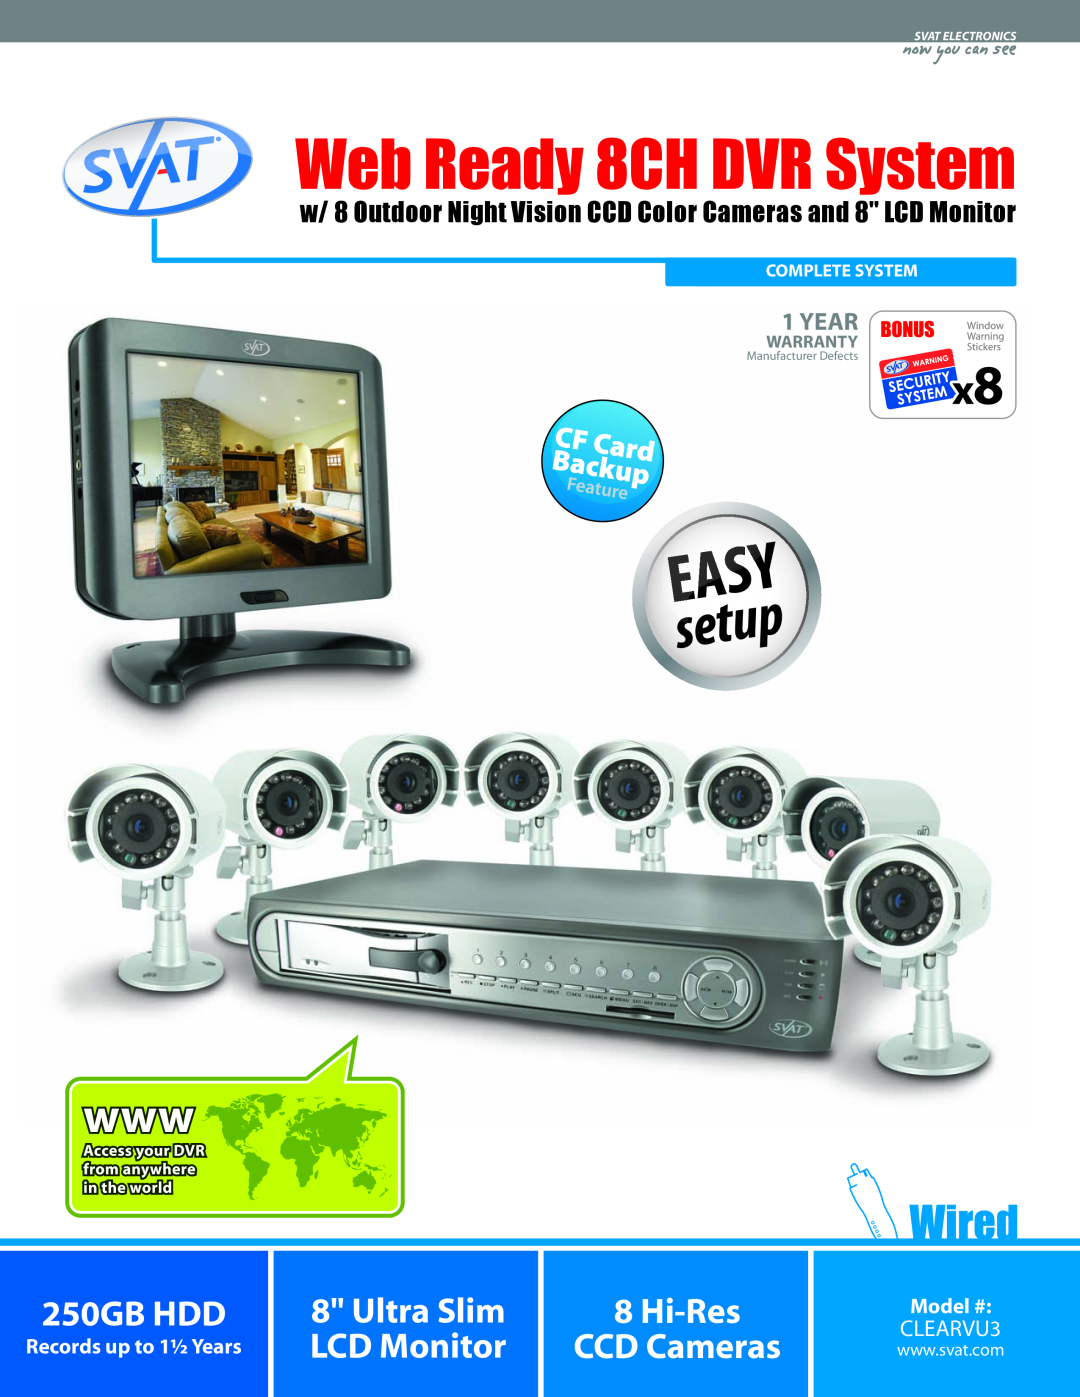 SVAT Electronics CLEARVU3 warranty Complete System, Svat Electronics, Web Ready 8CH DVR System, 250GB HDD, Ultra Slim 